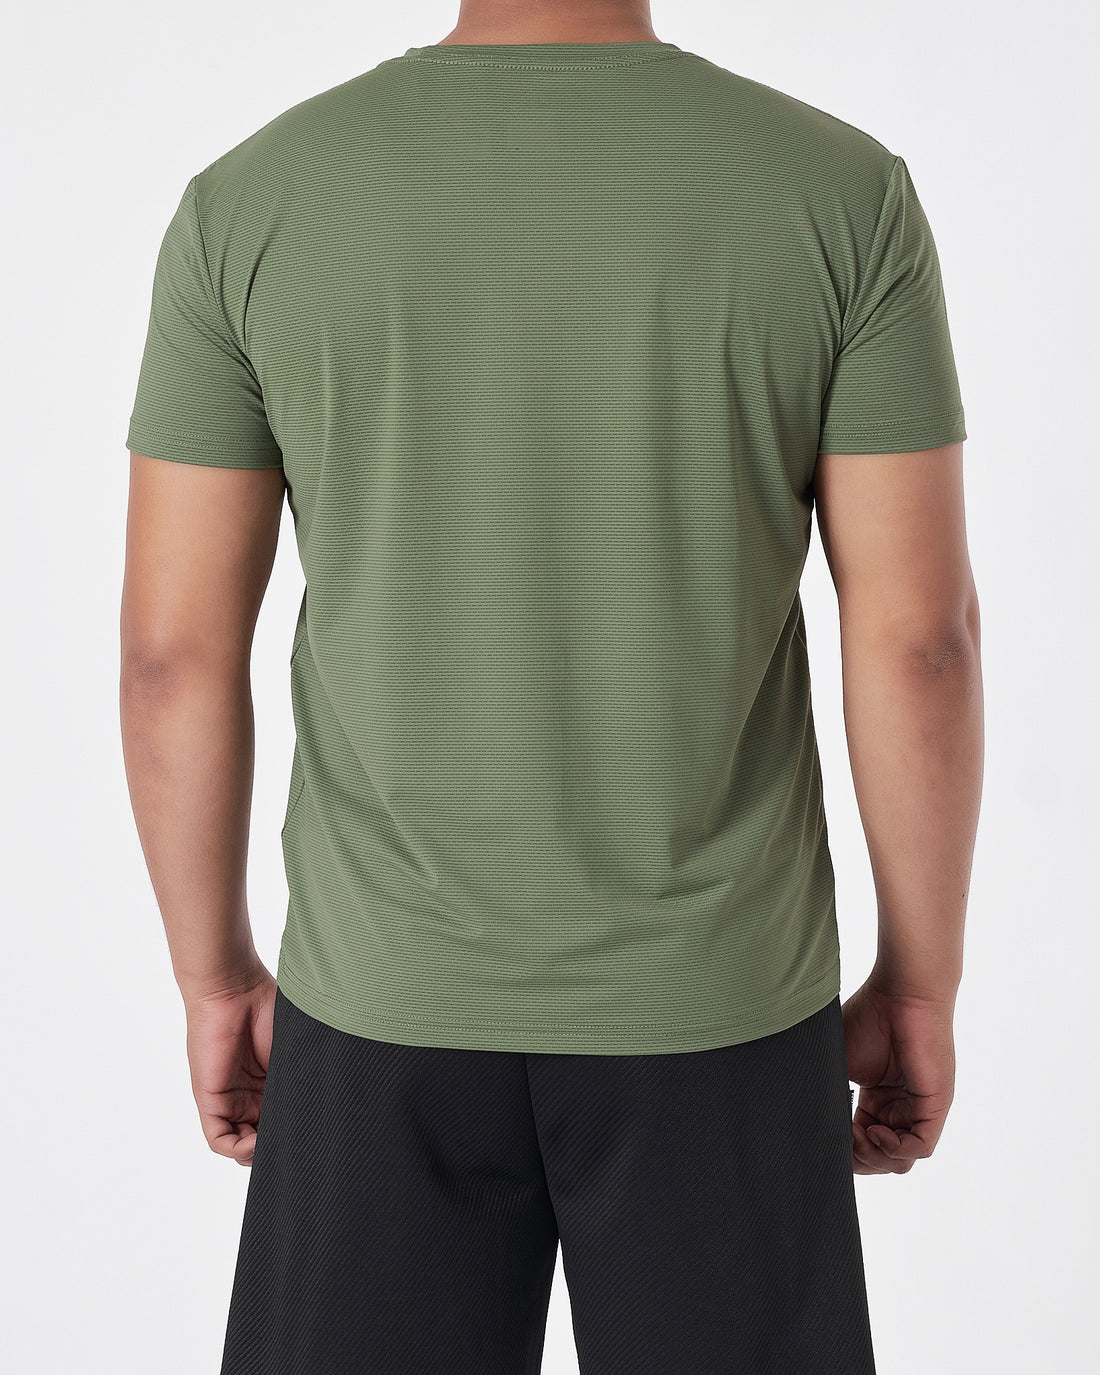 DES Logo Printed Men Green Sport T-Shirt 13.50